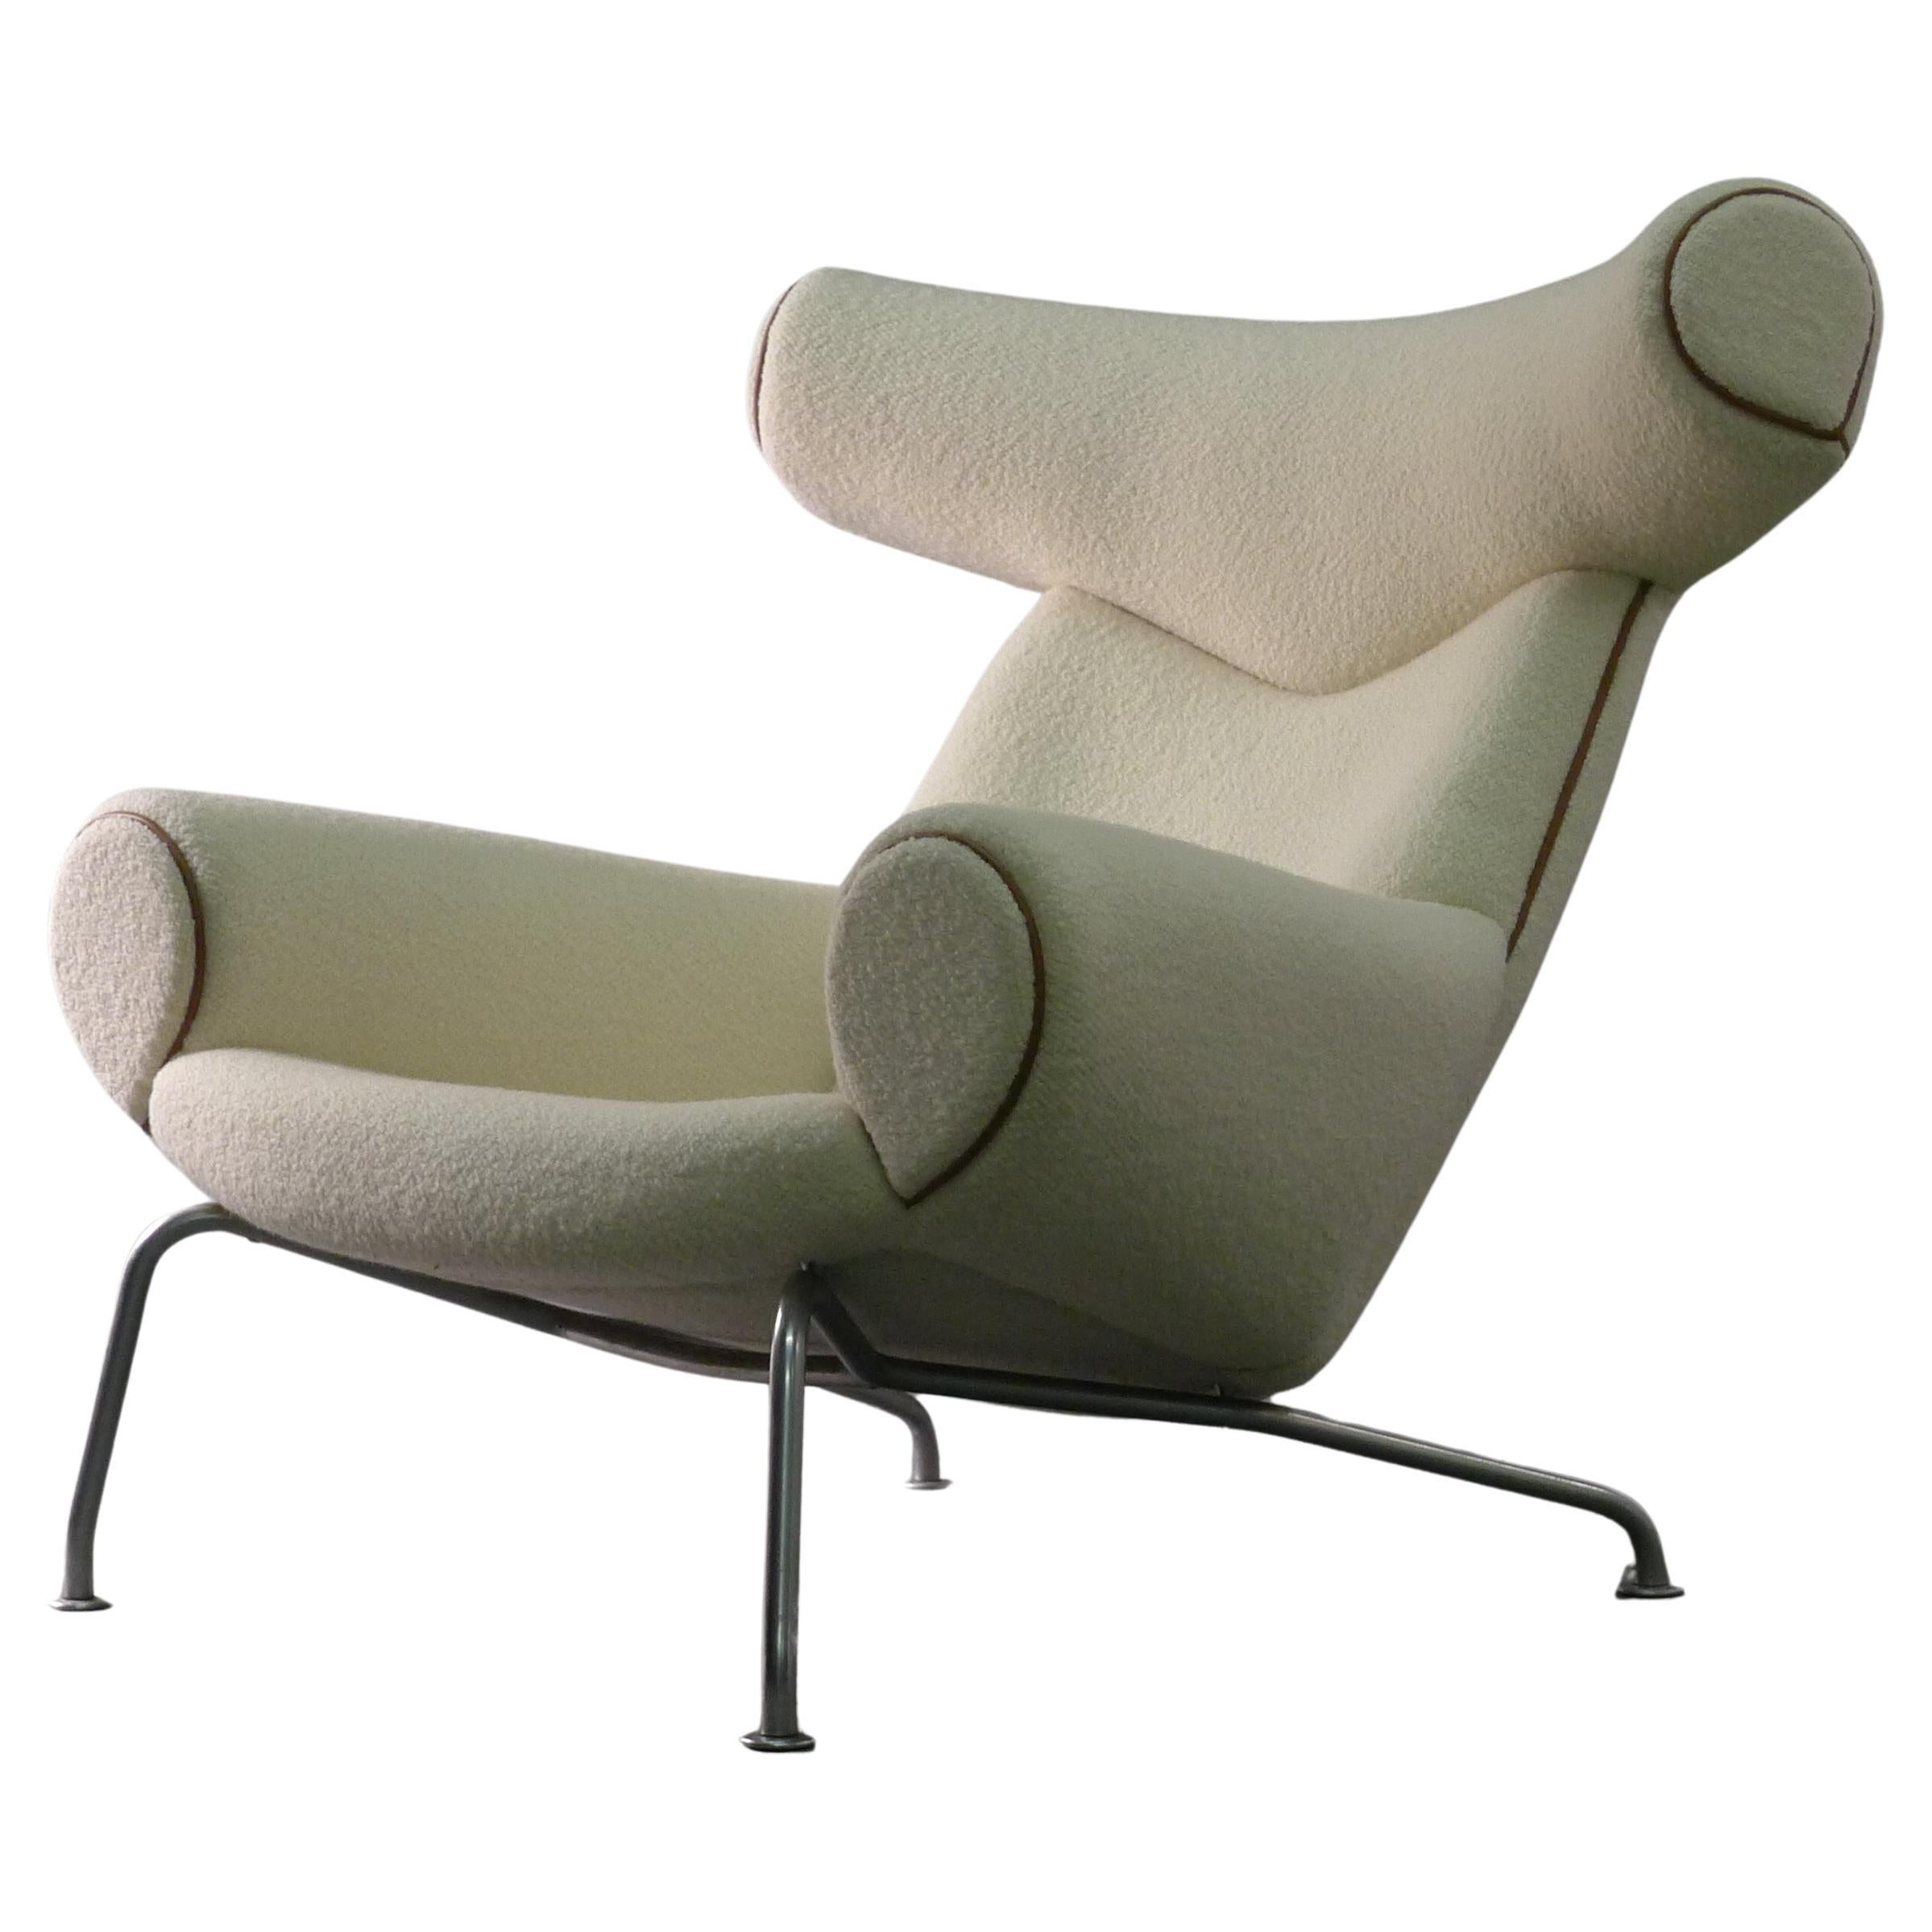 Hans Wegner, Ox Chair, Model AP-46, Designed 1960, Made by AP Stolen, Copenhagen